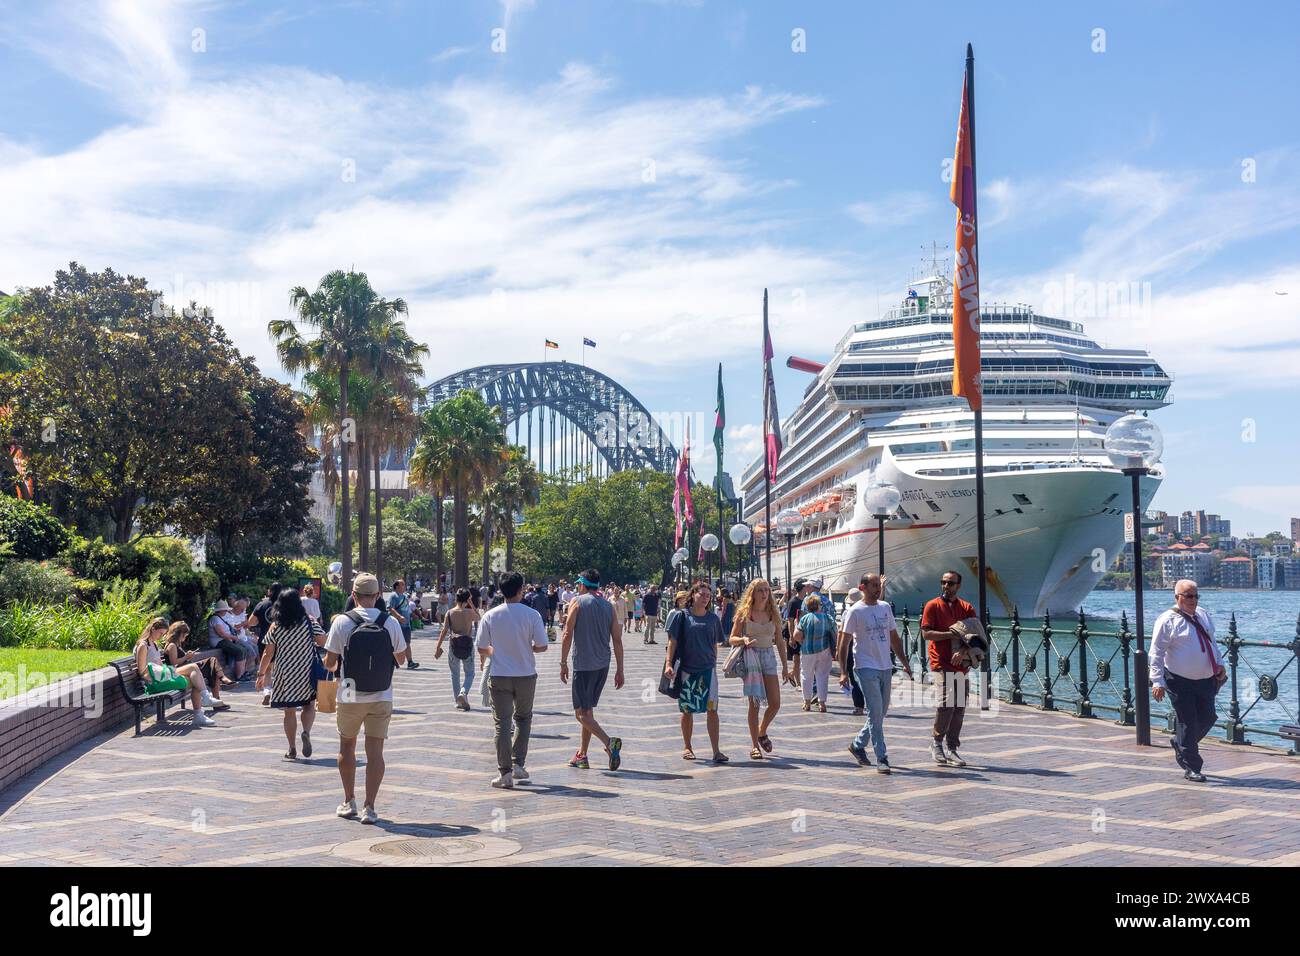 Carnival Splendor cruise ship docked by Sydney Harbour  Bridge, Circular Quay West, Sydney, New South Wales, Australia Stock Photo